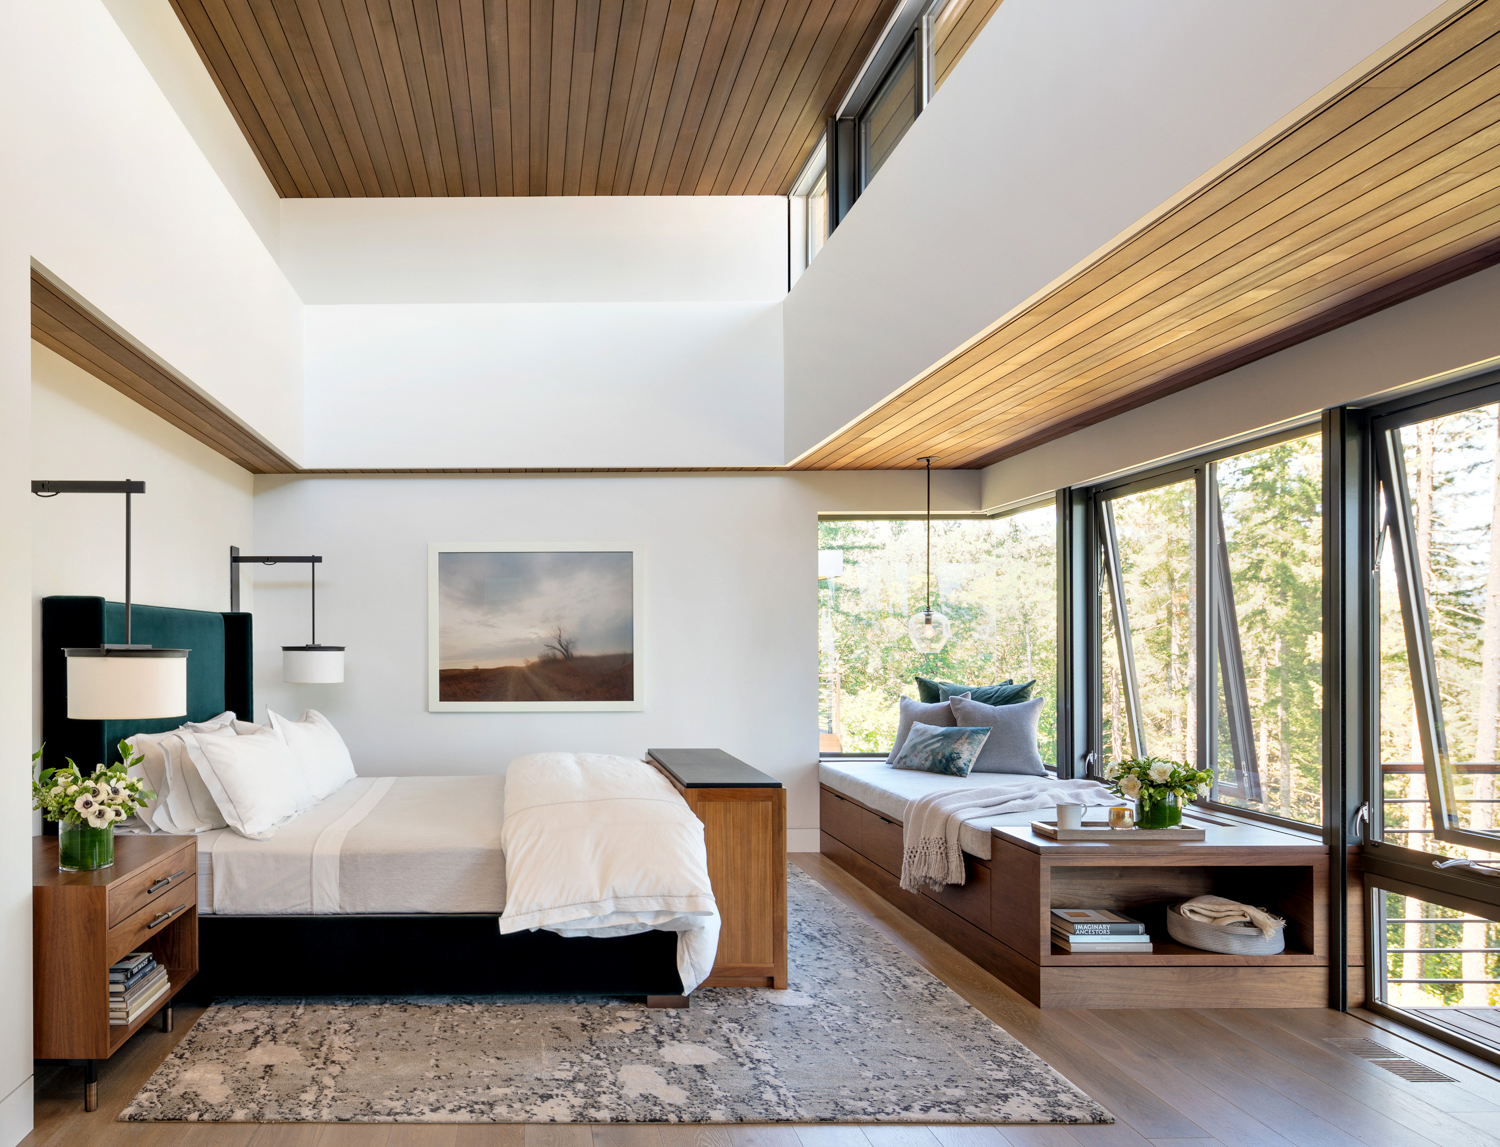 Alana Homesley Interior Design white wood bedroom red award winner